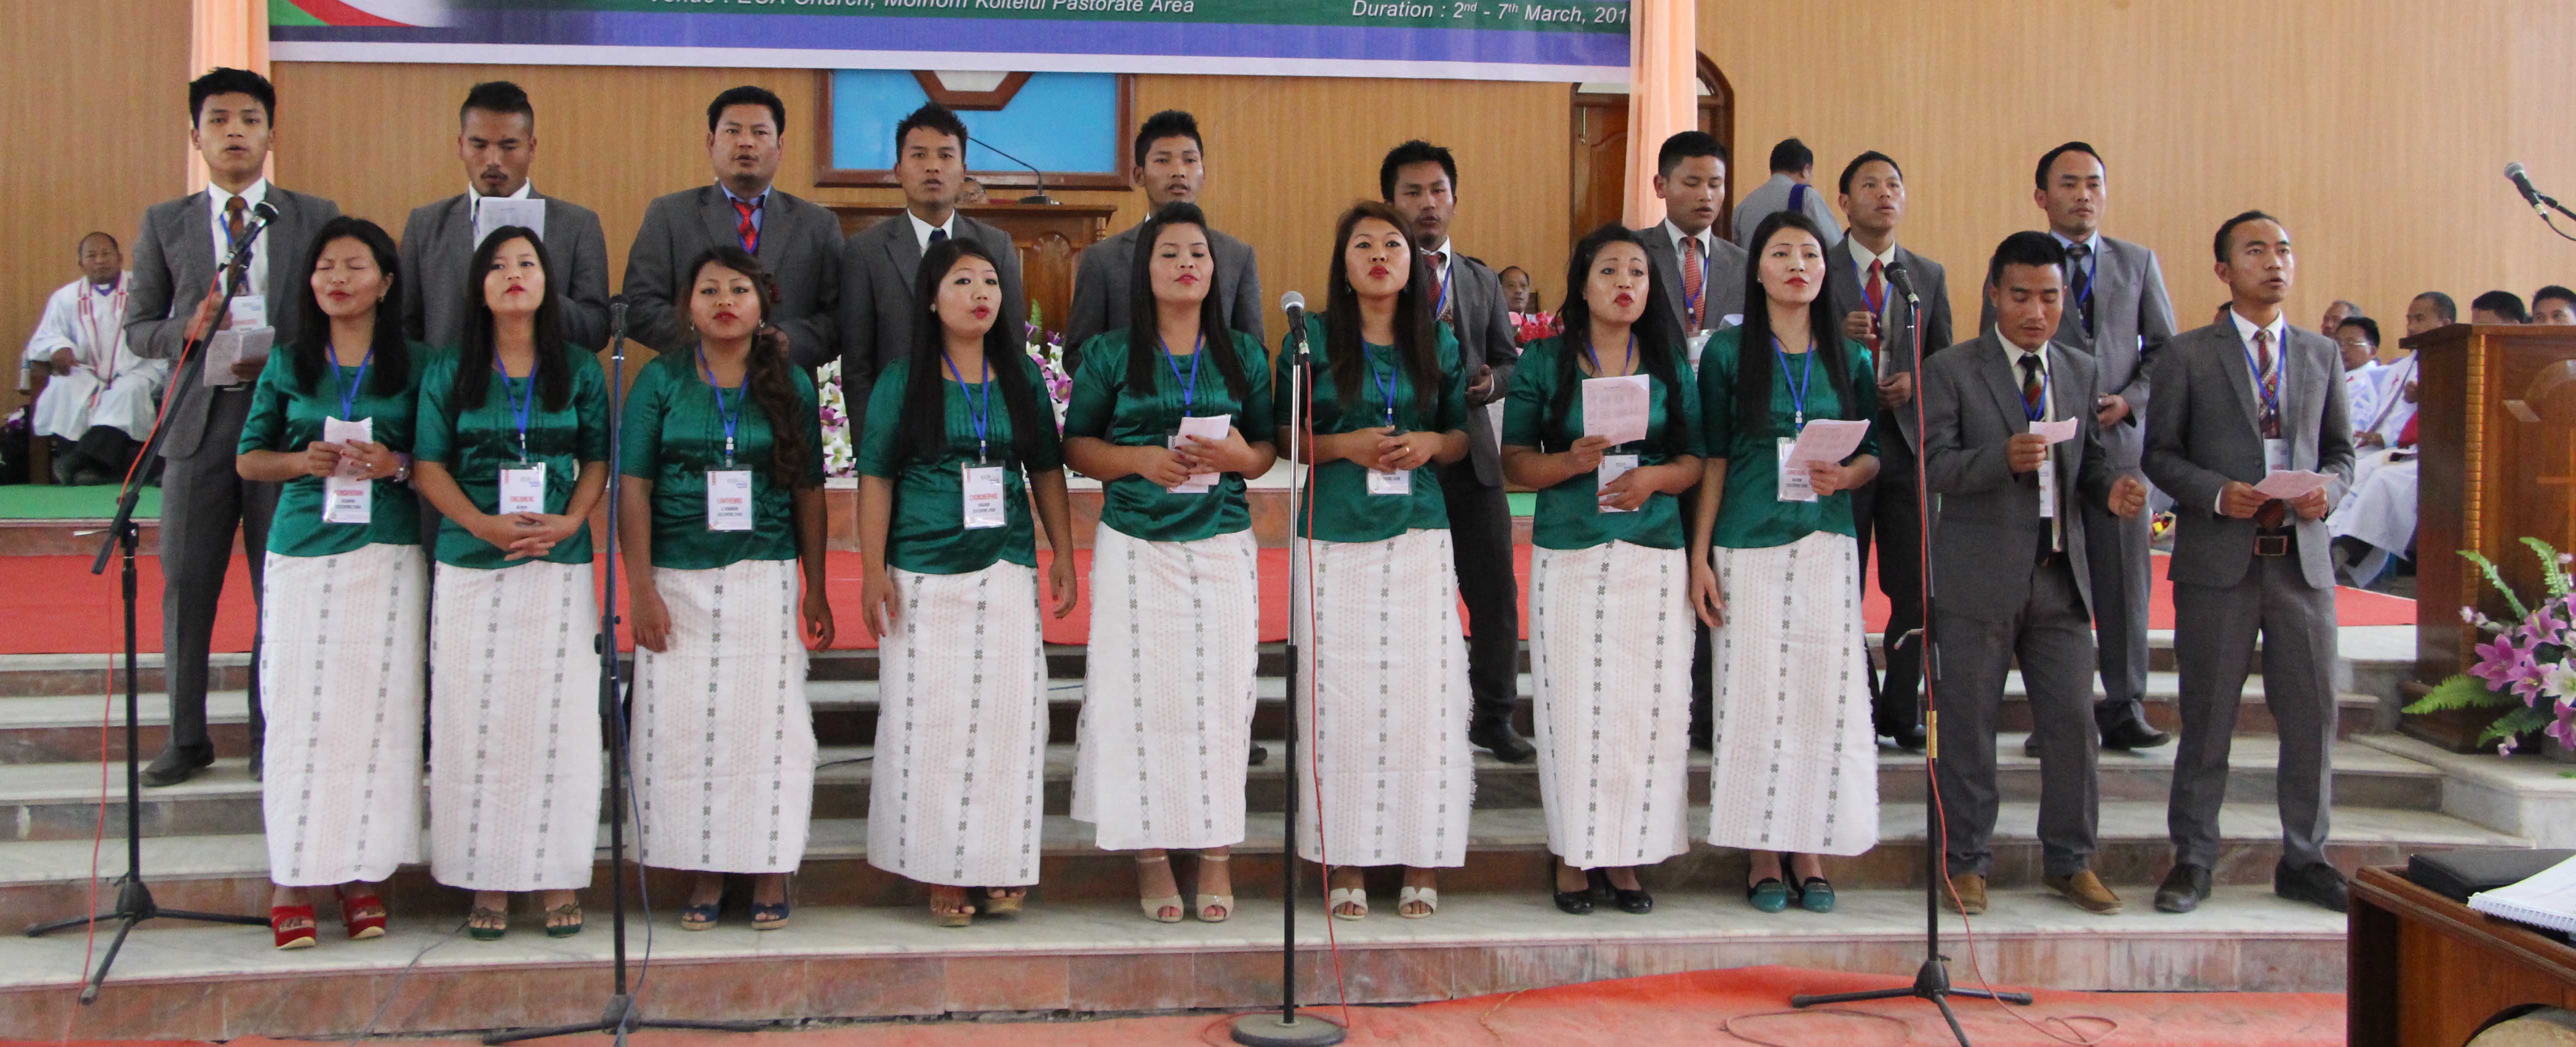 ECA Central Choir